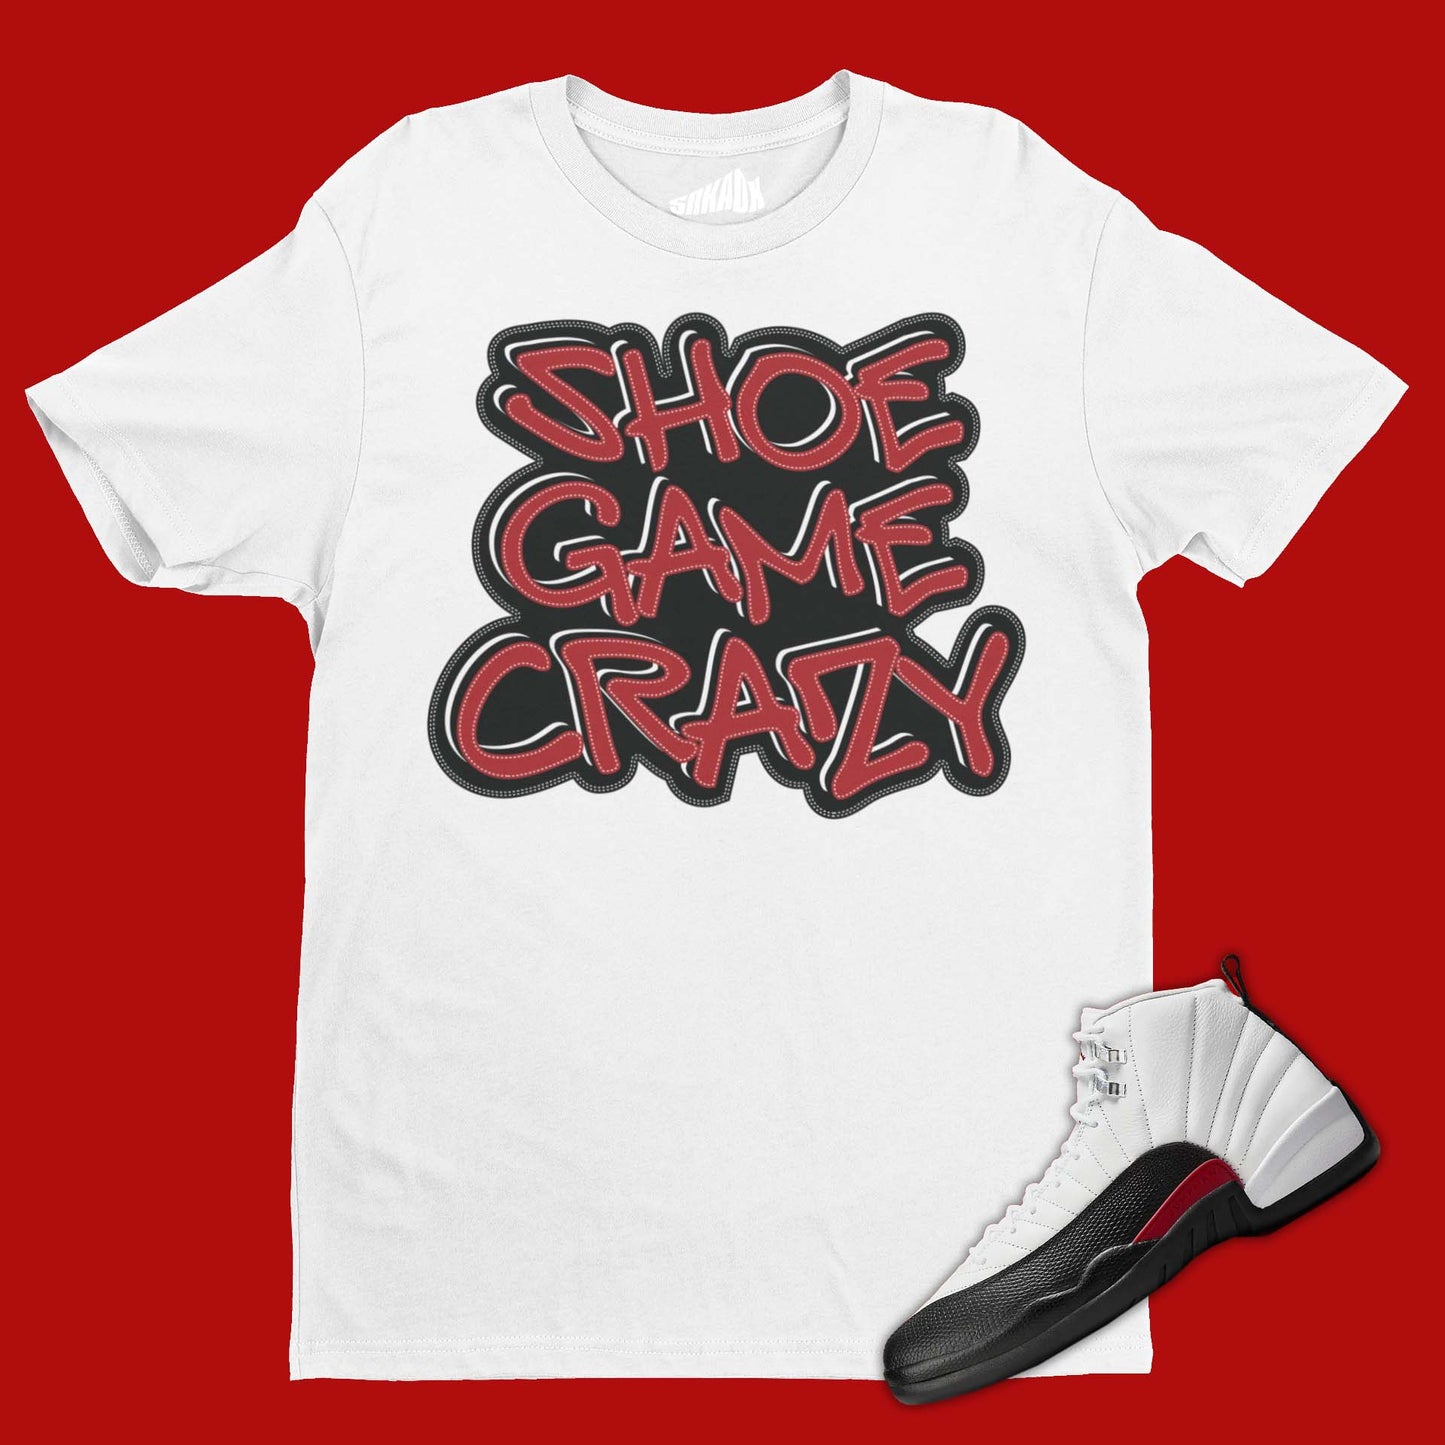 Shoe Game Crazy T-Shirt Matching Air Jordan 12 Red Taxi